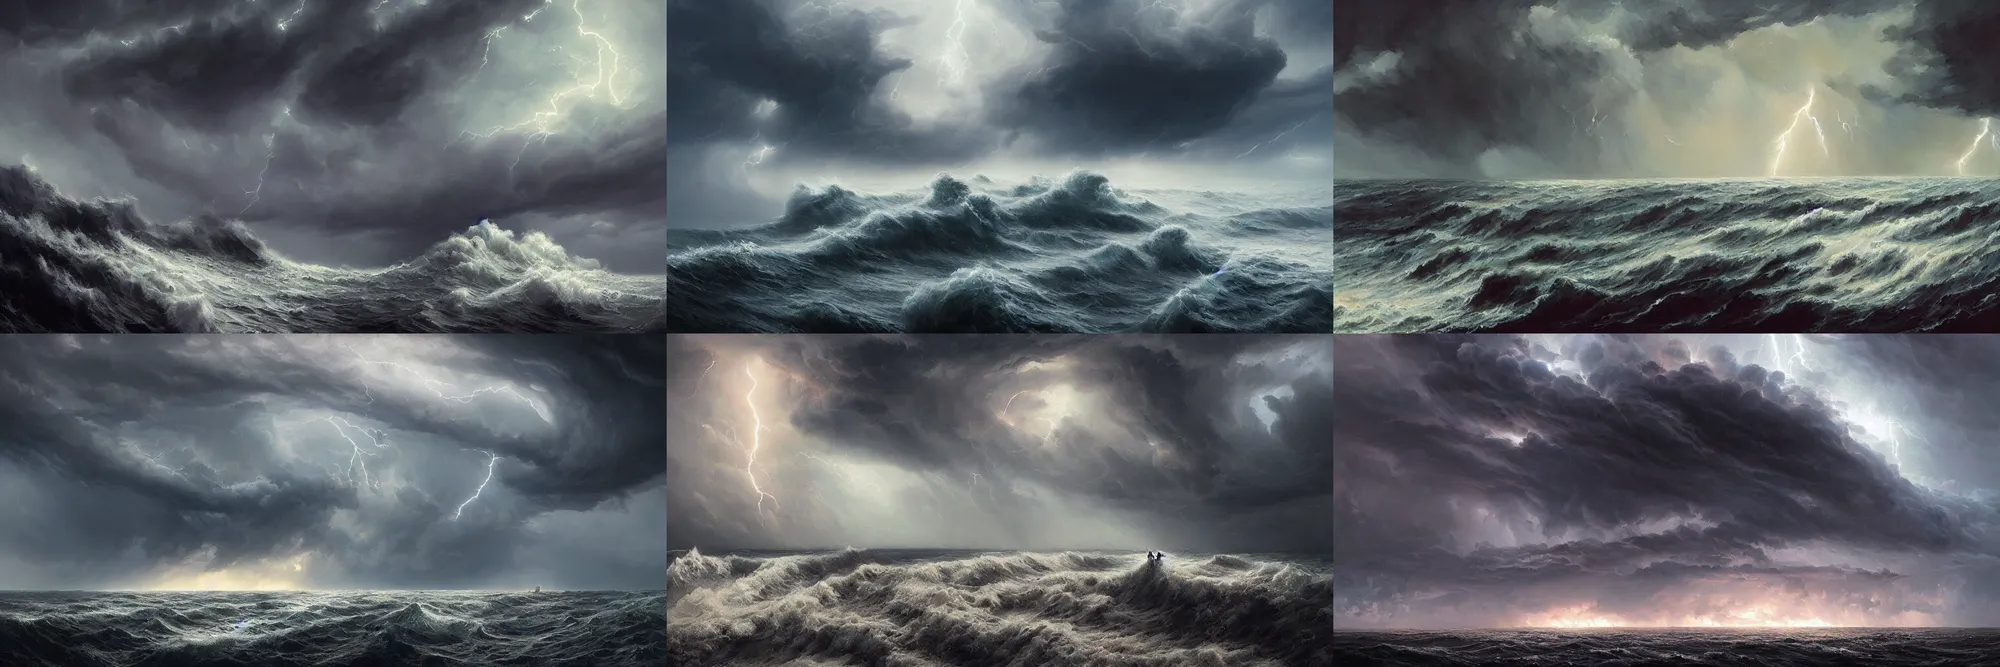 Prompt: tumultuous sea, tornado, storm, vortex, lightning, clouds, dramatic lighting, dark, by greg rutkowski and jeffrey smith, trending on artstation